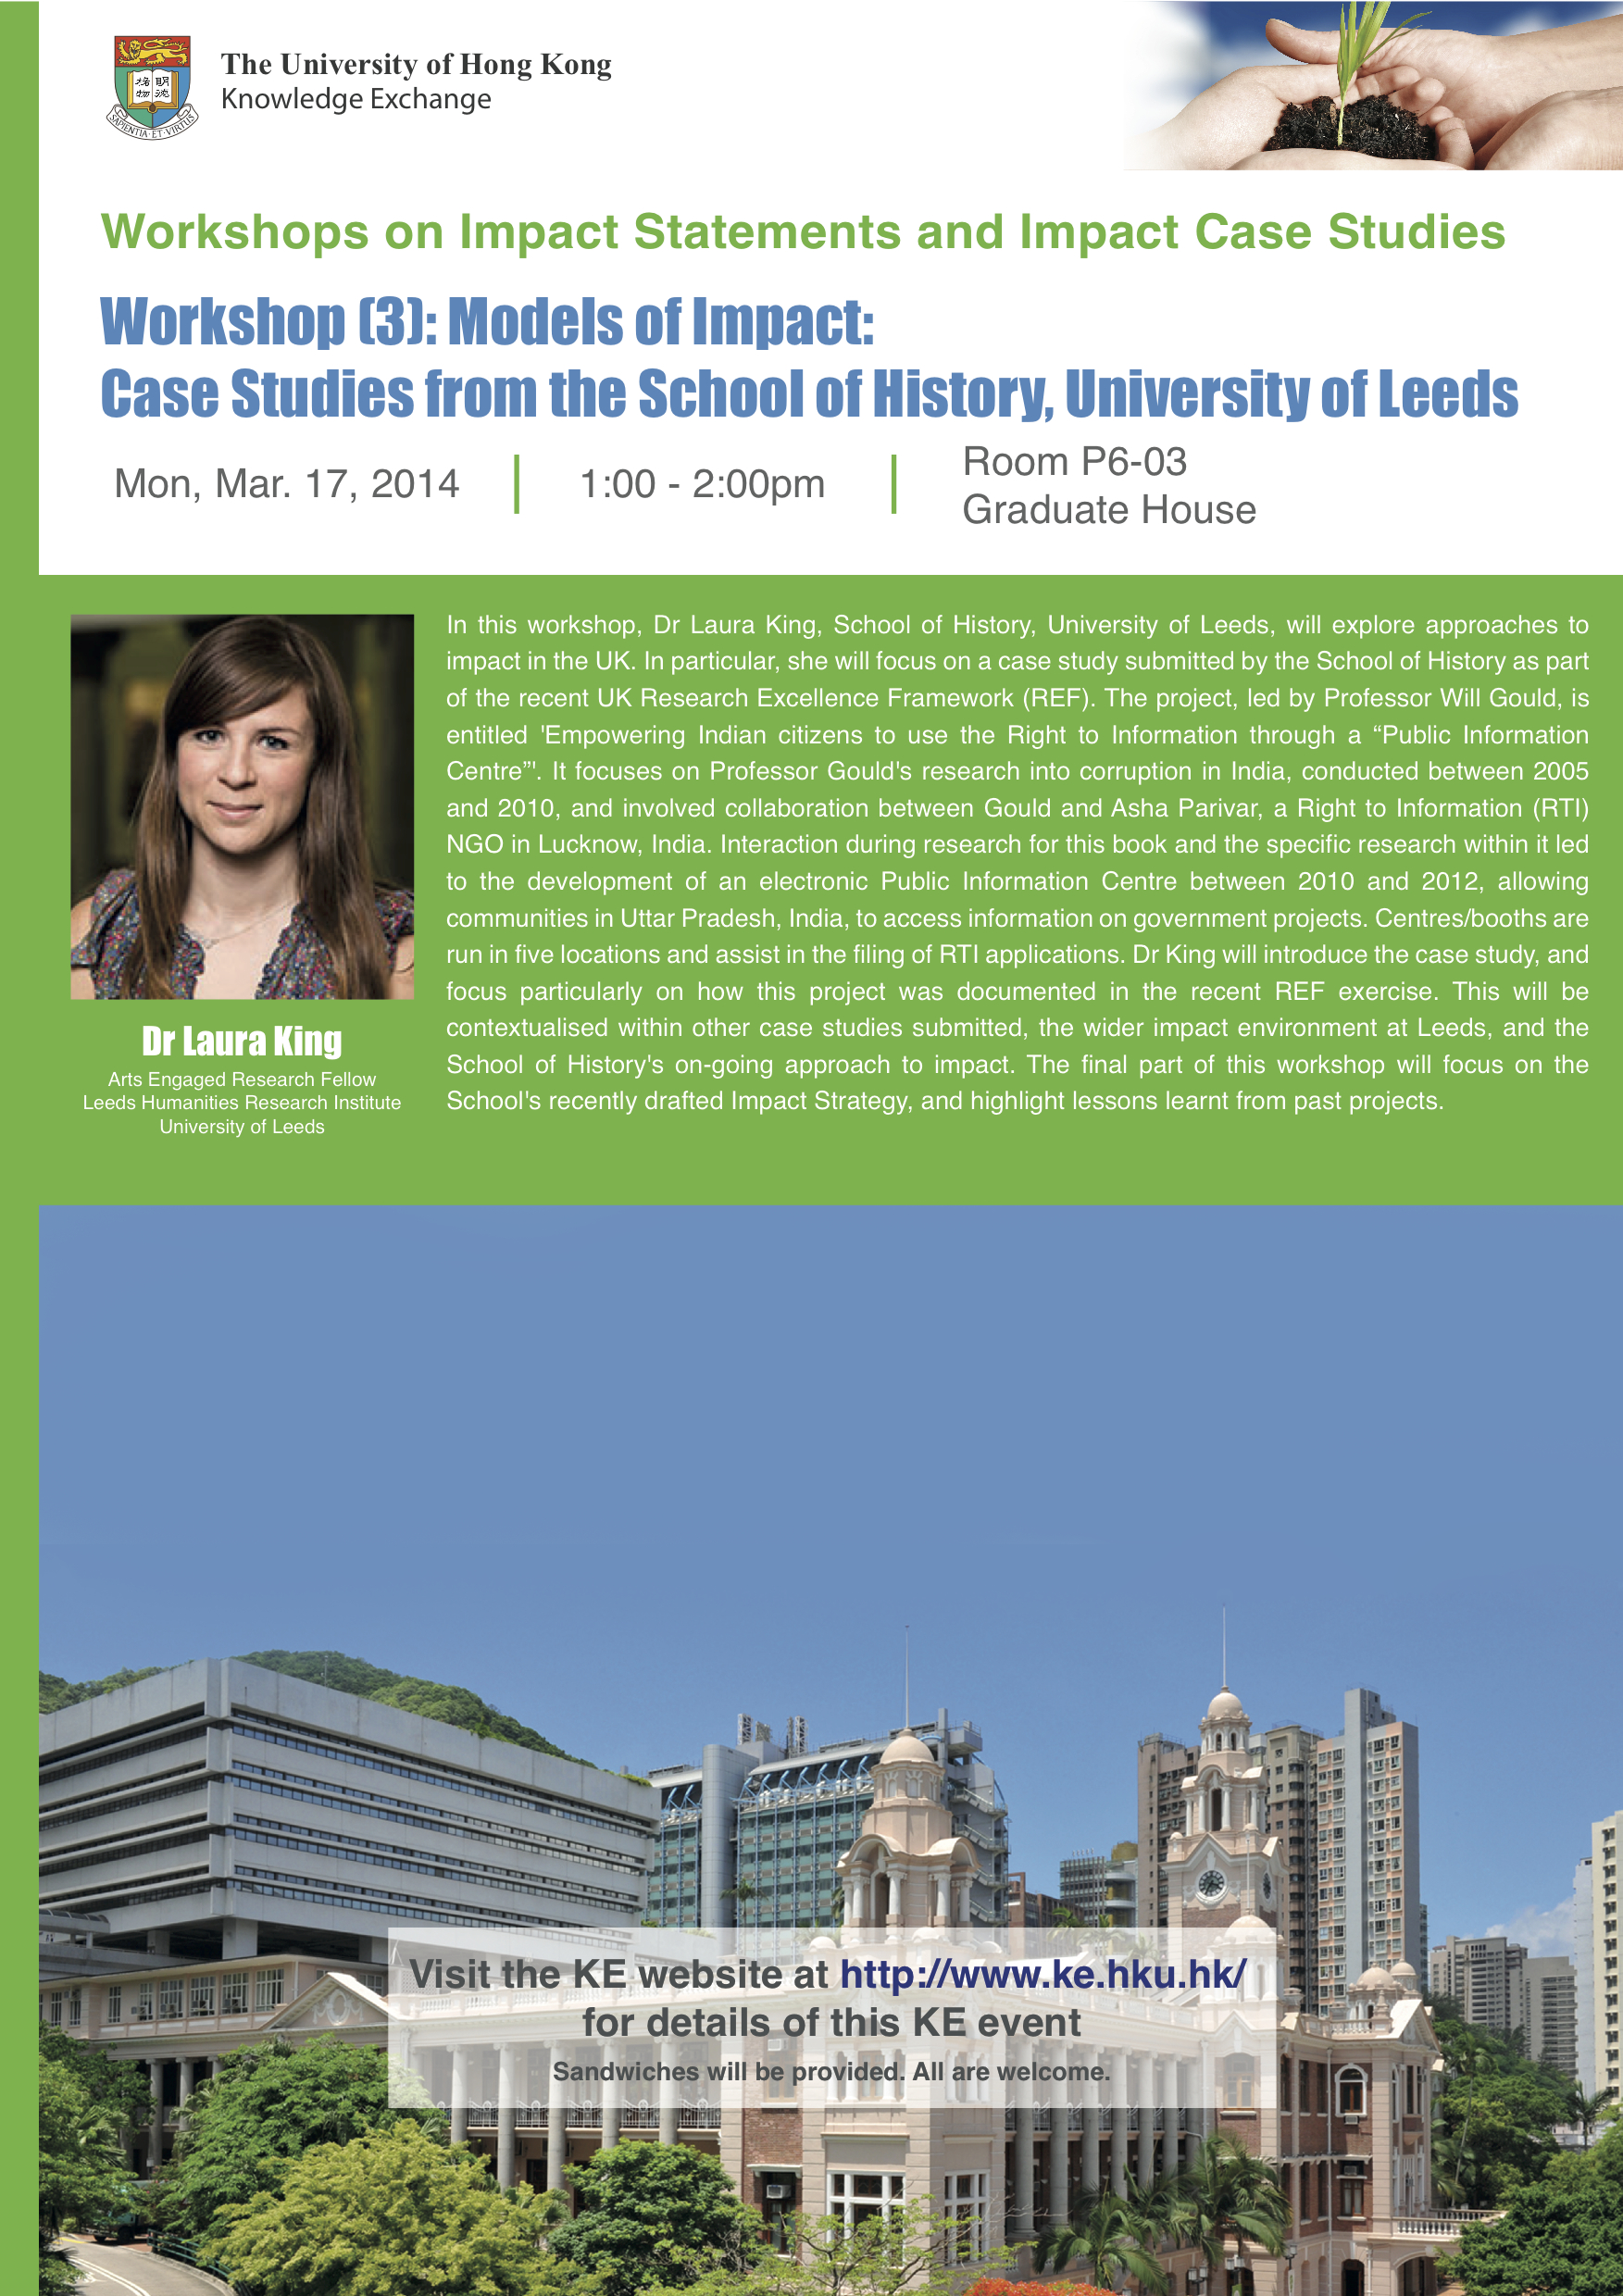 Workshop (3): Models of Impact: Case Studies from the School of History, University of Leeds